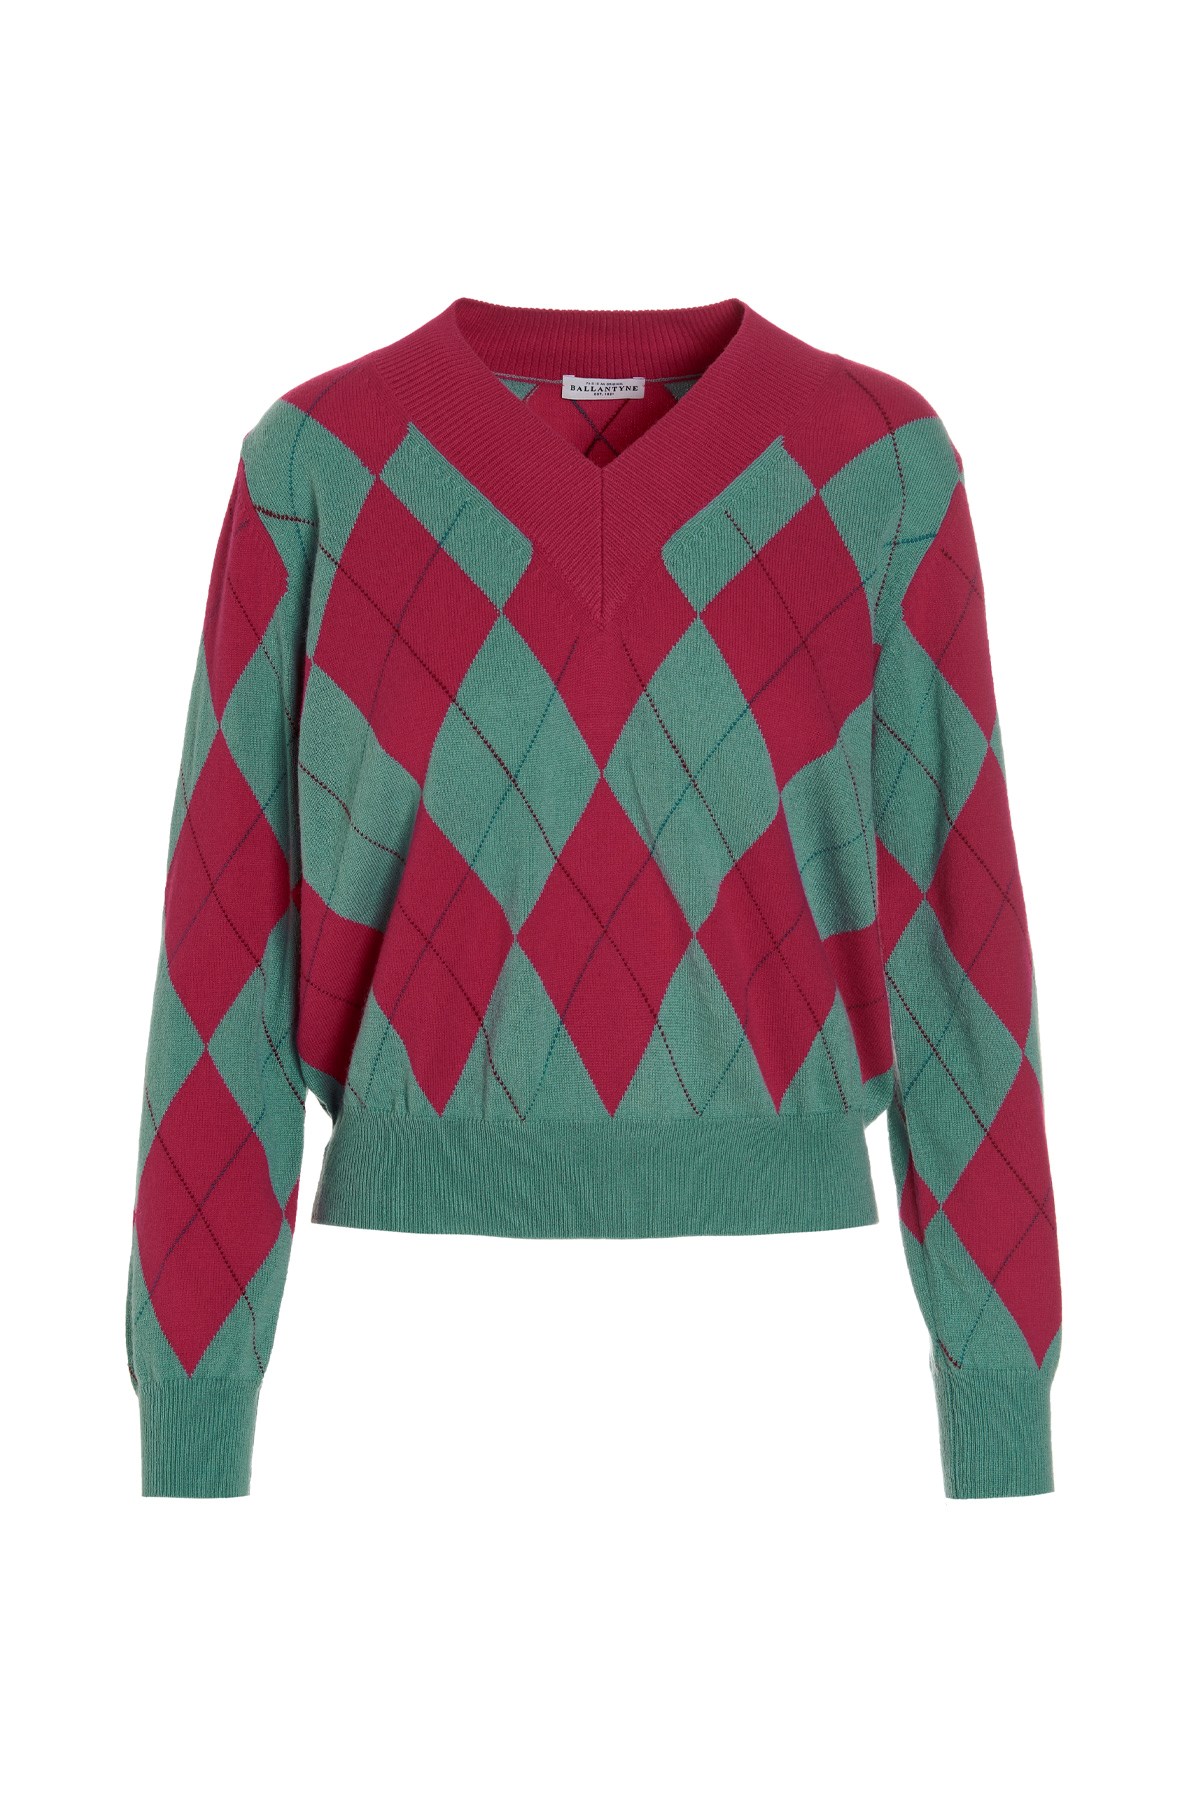 BALLANTYNE 'Diamond' Sweater